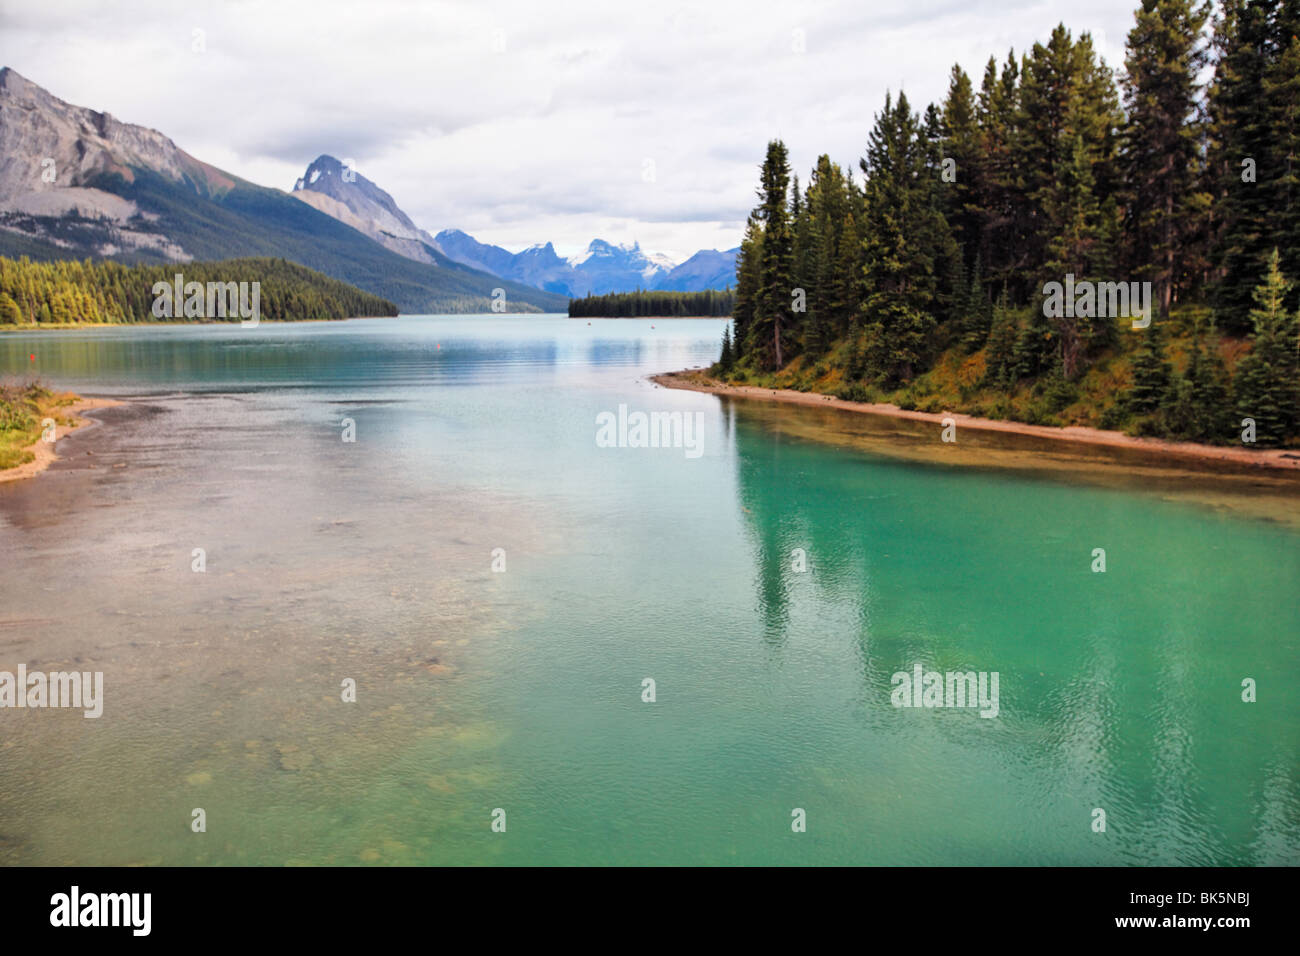 Island on a Lake, Maligne Lake, Jasper Nat'l Park, Alberta, Canada Stock Photo